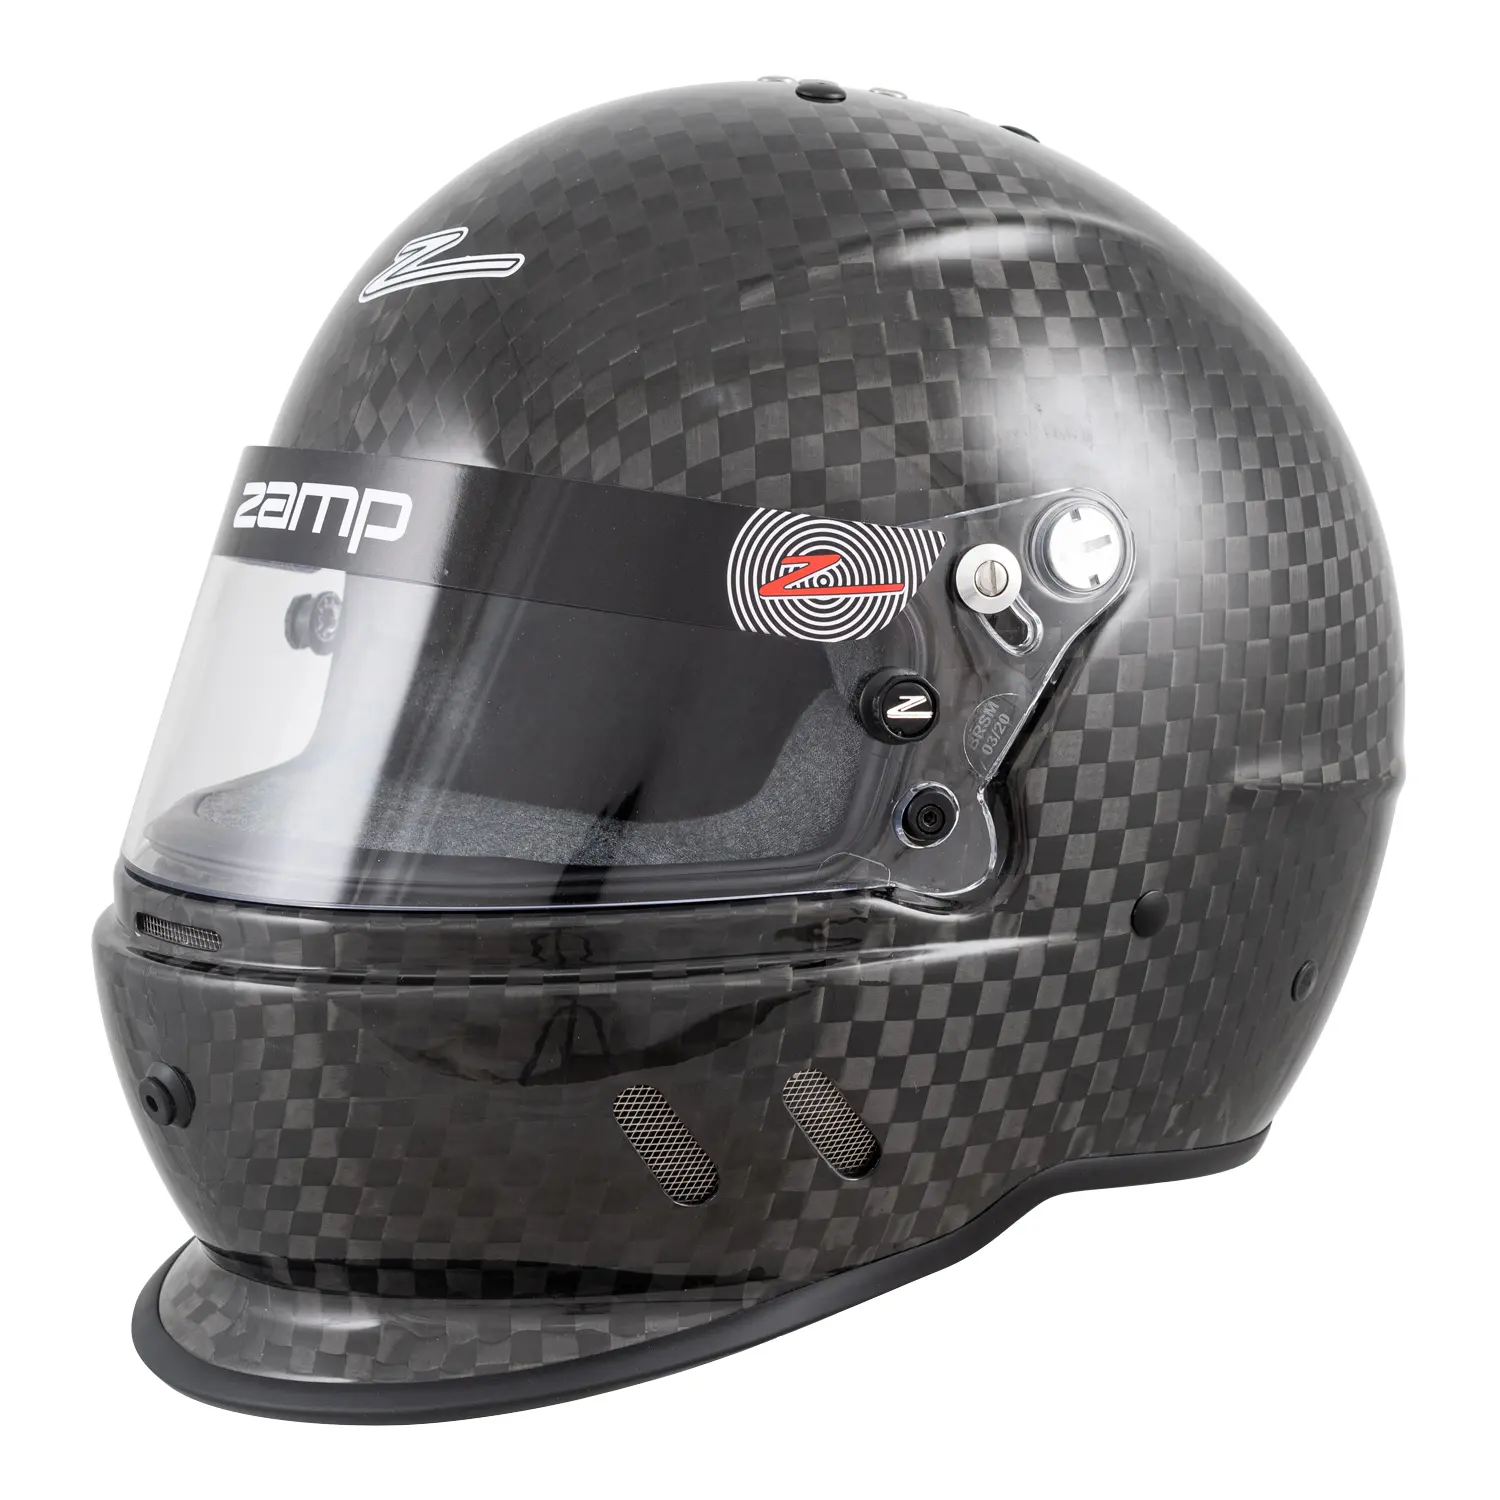 RZ-65D Carbon Helmet